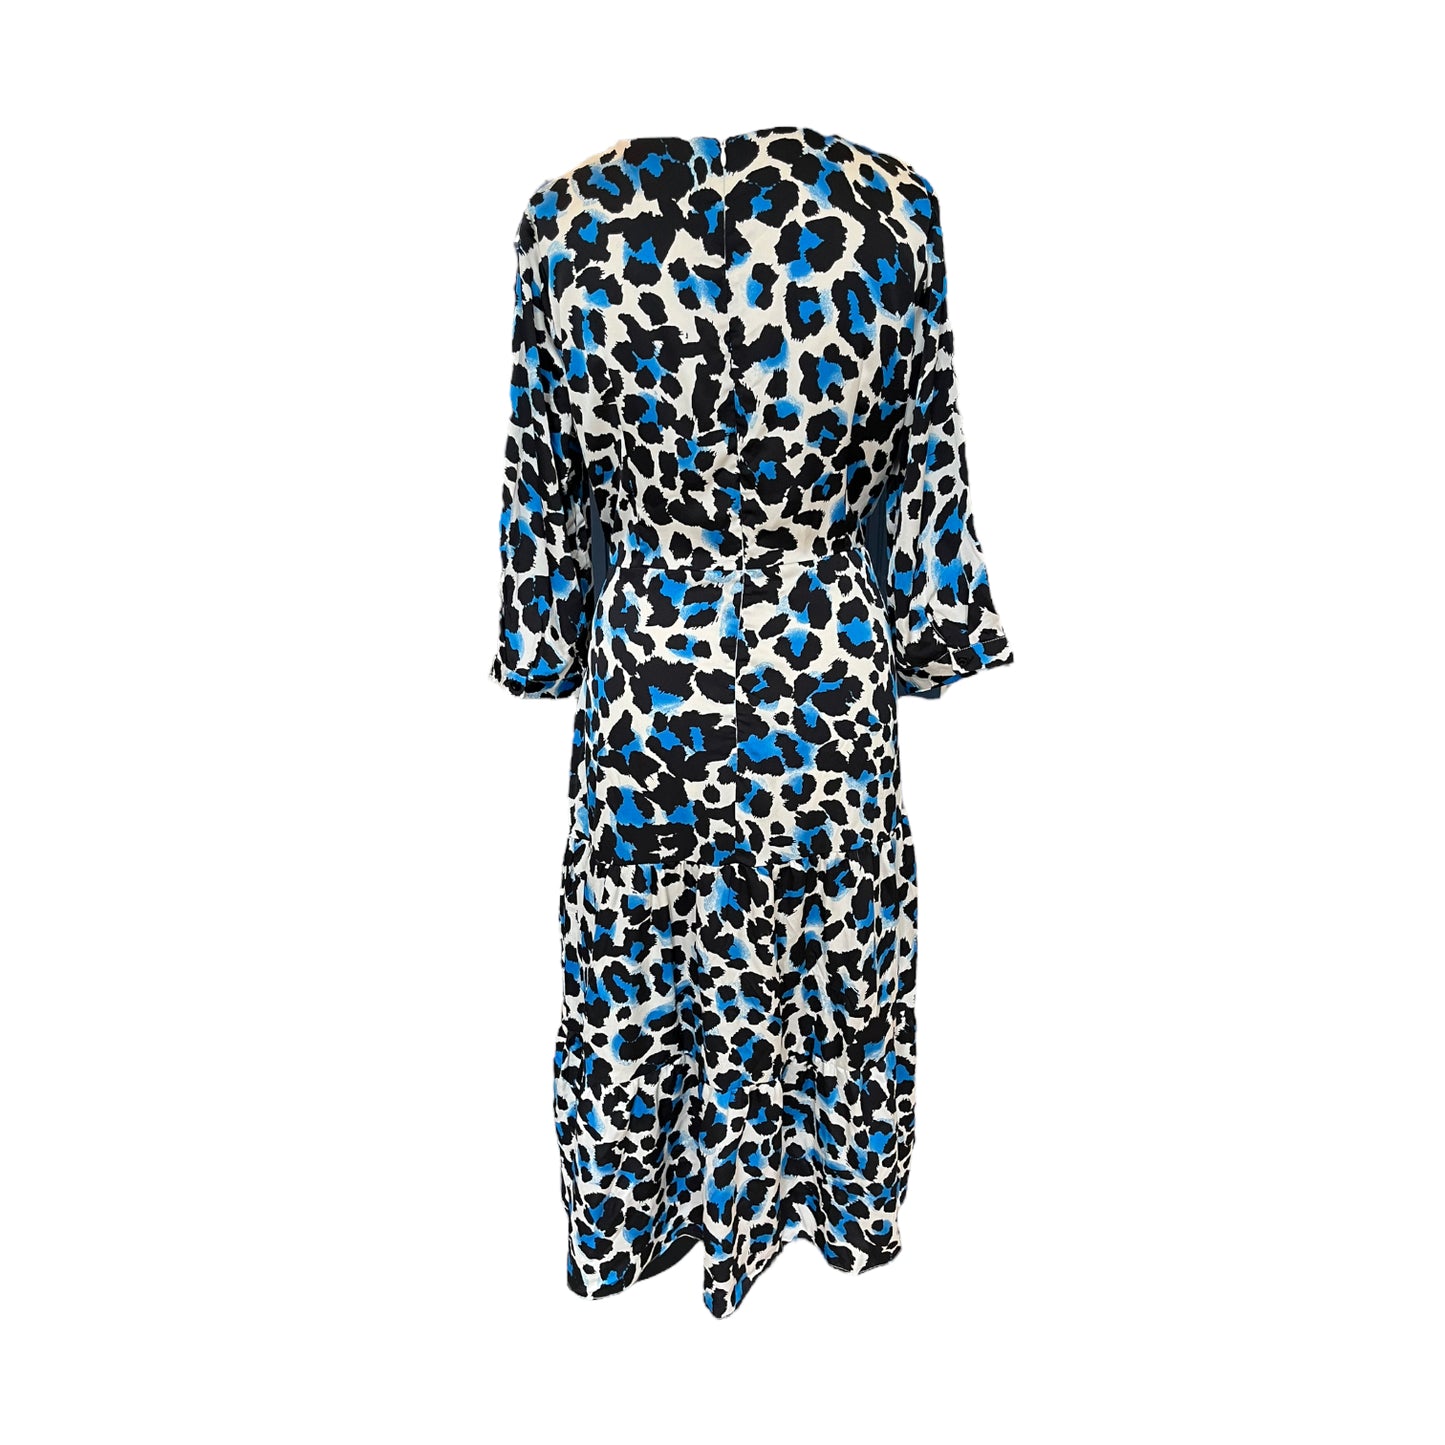 Marc Angelo Blue and Black Animal Print Dress